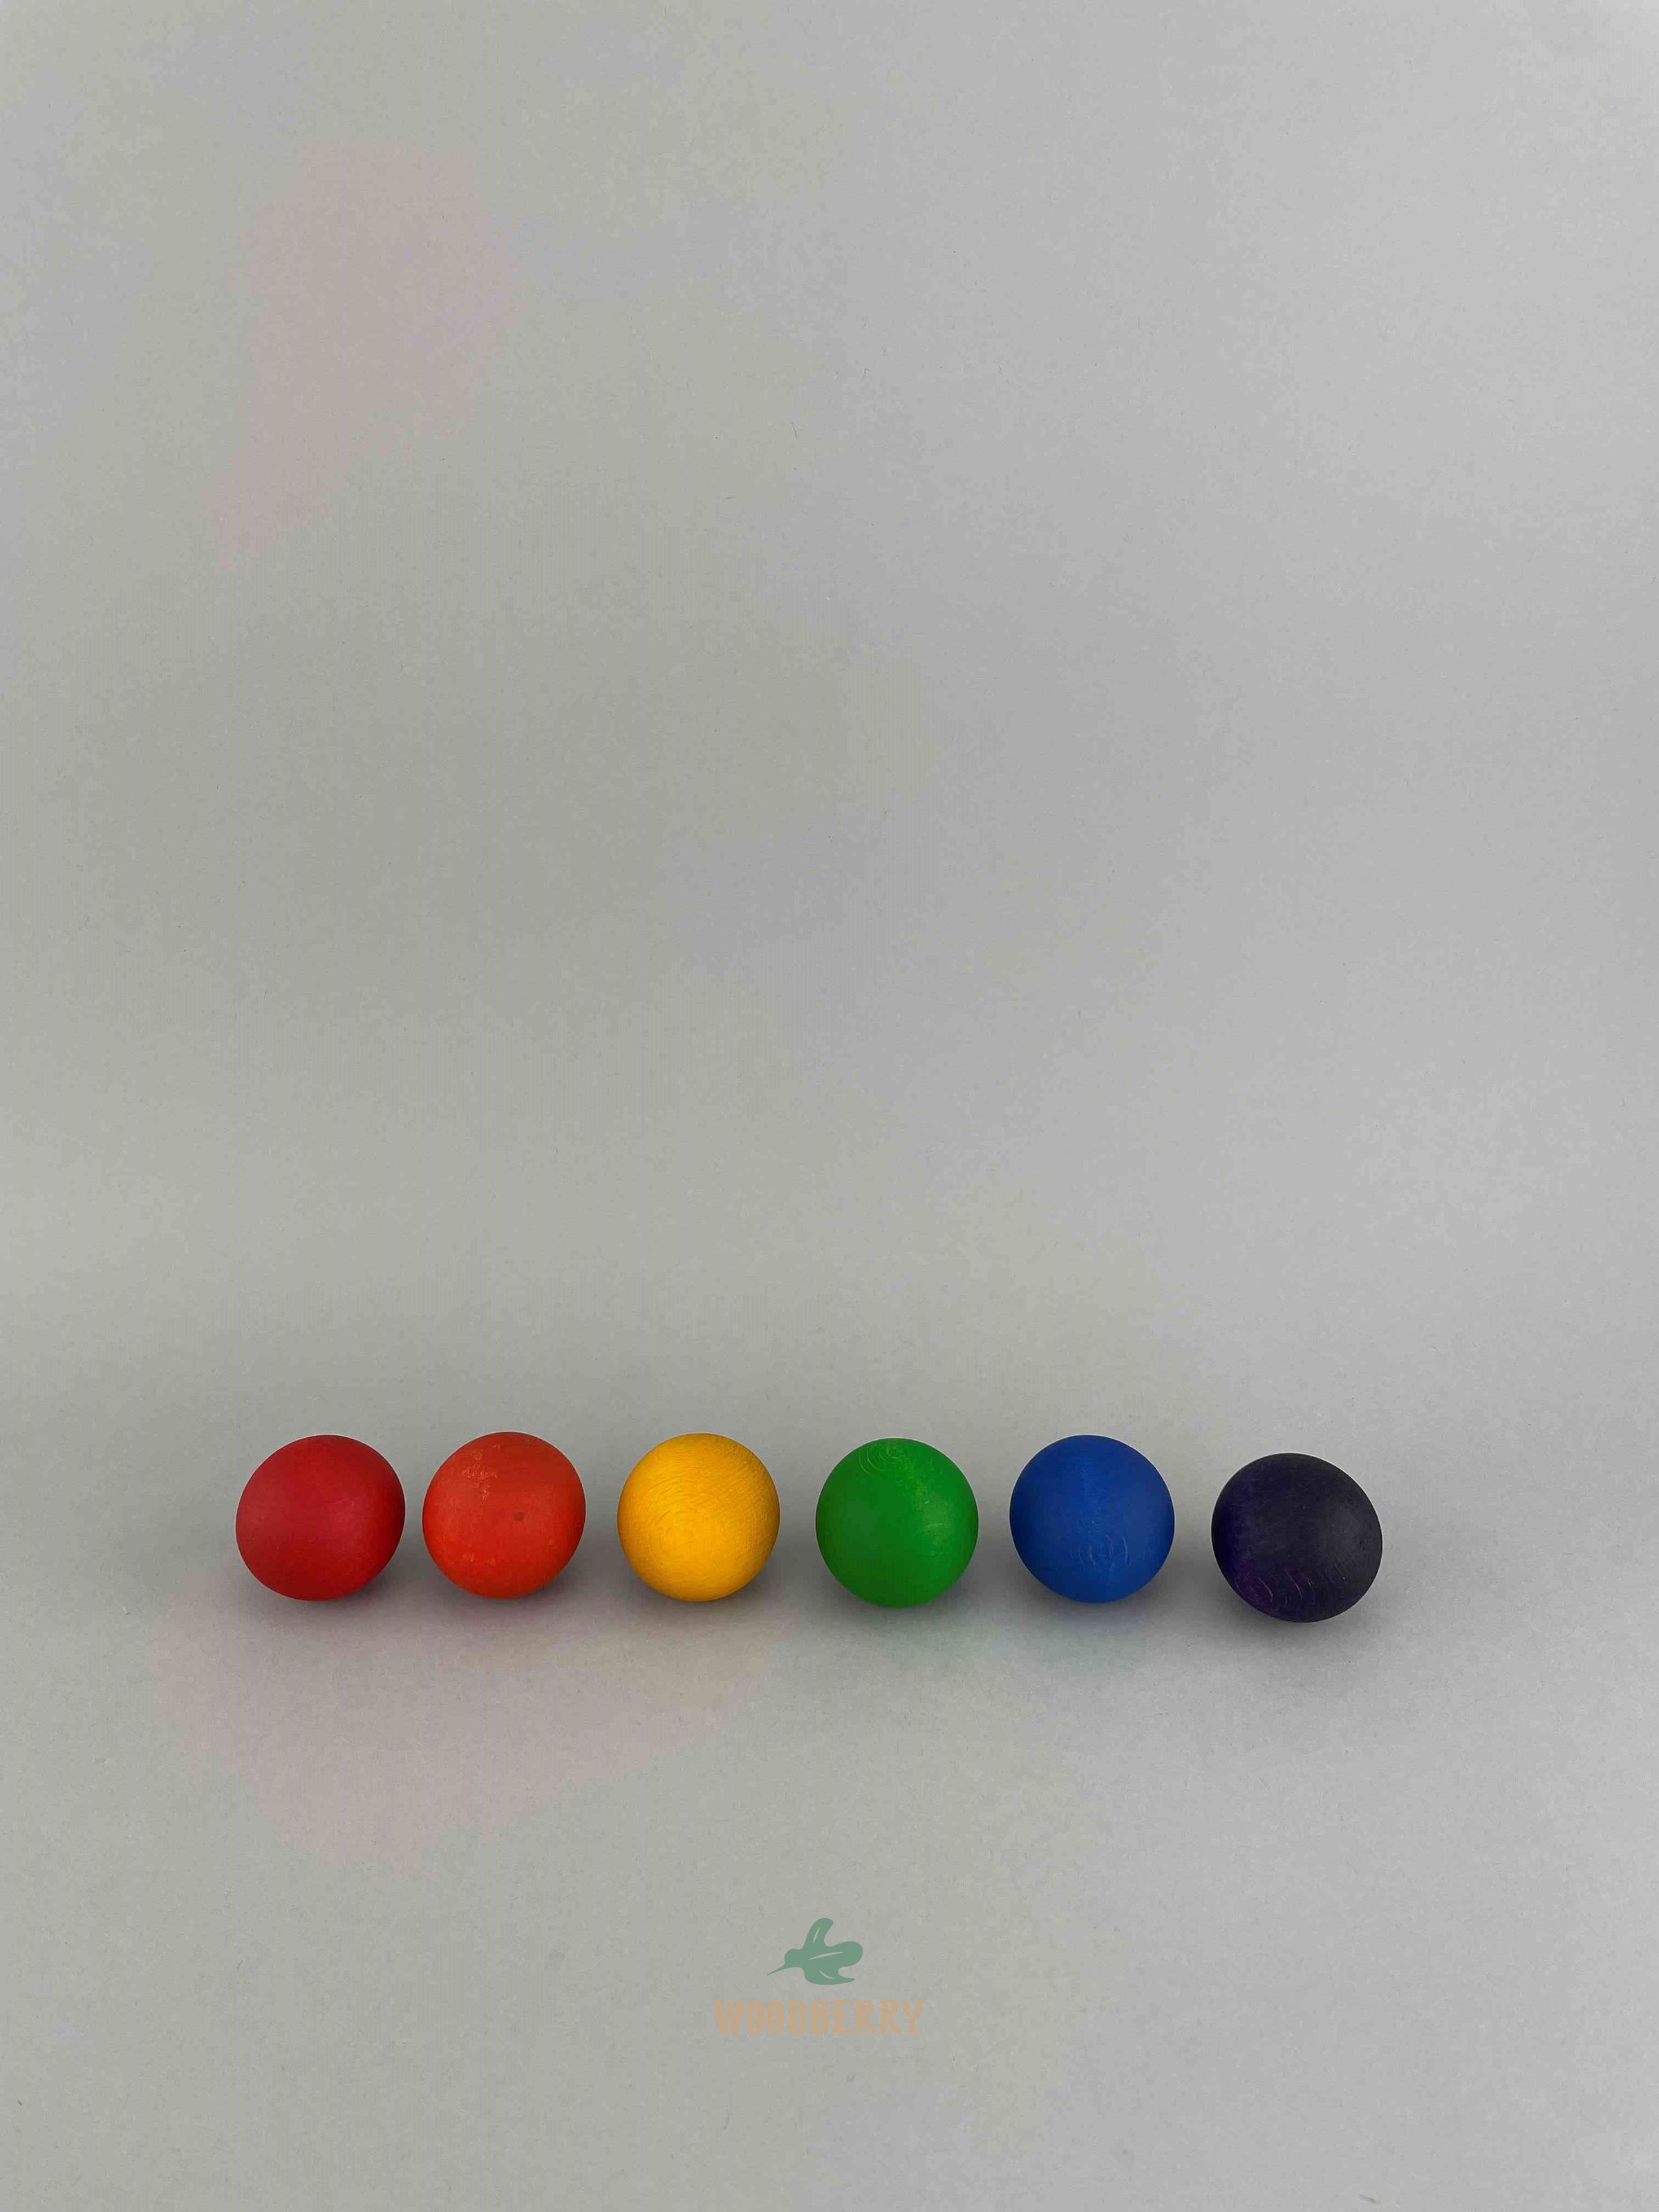 6 Pcs Wooden Balls in Rainbow Colors Diameter 1.8 Inches